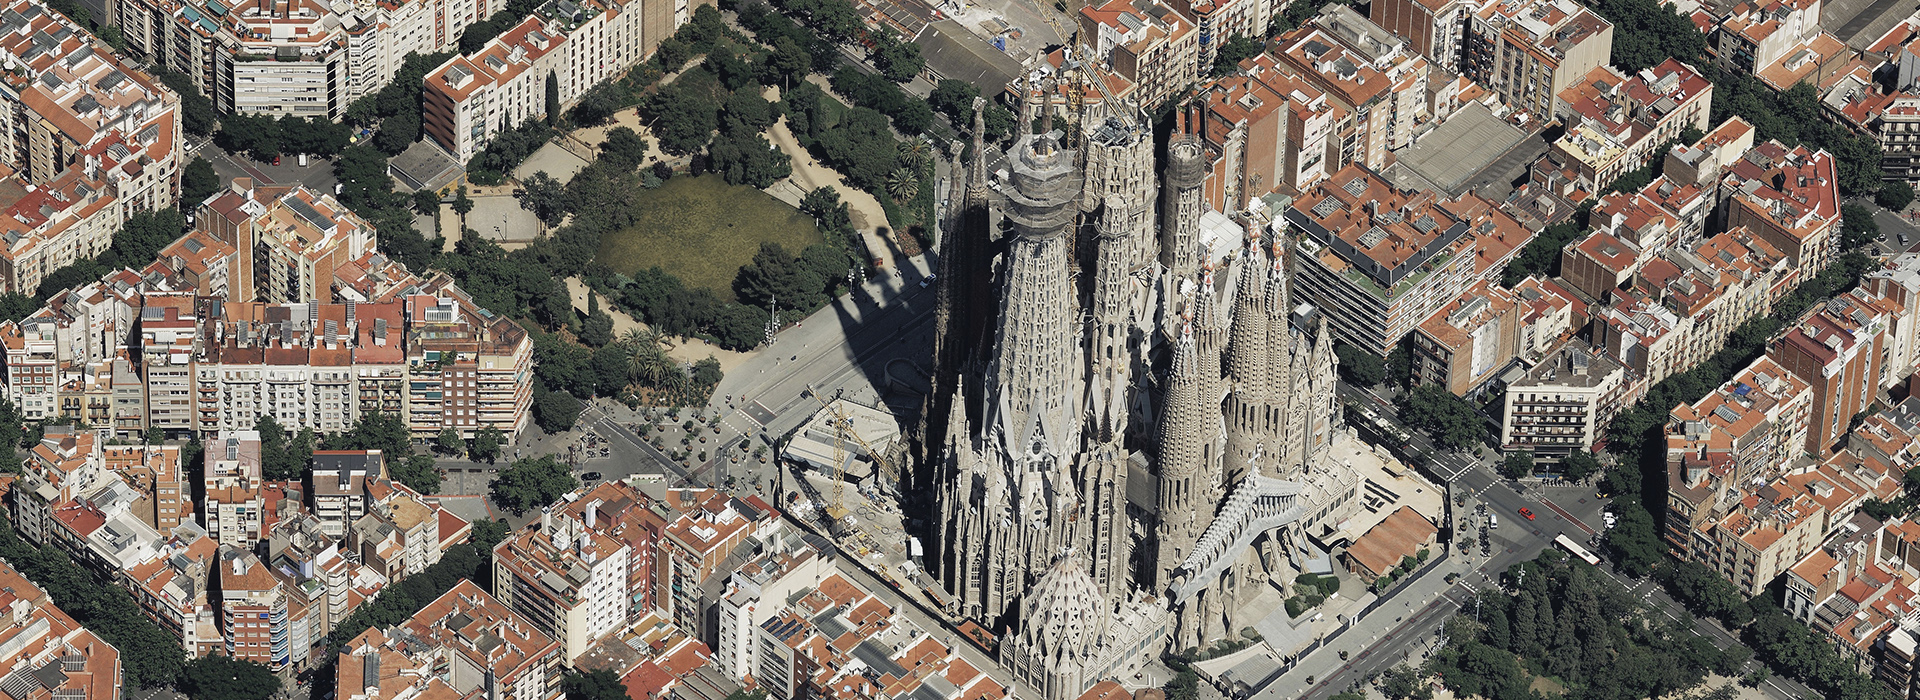 Aerial Image of Sagrada Familia in Barcelona, Spain